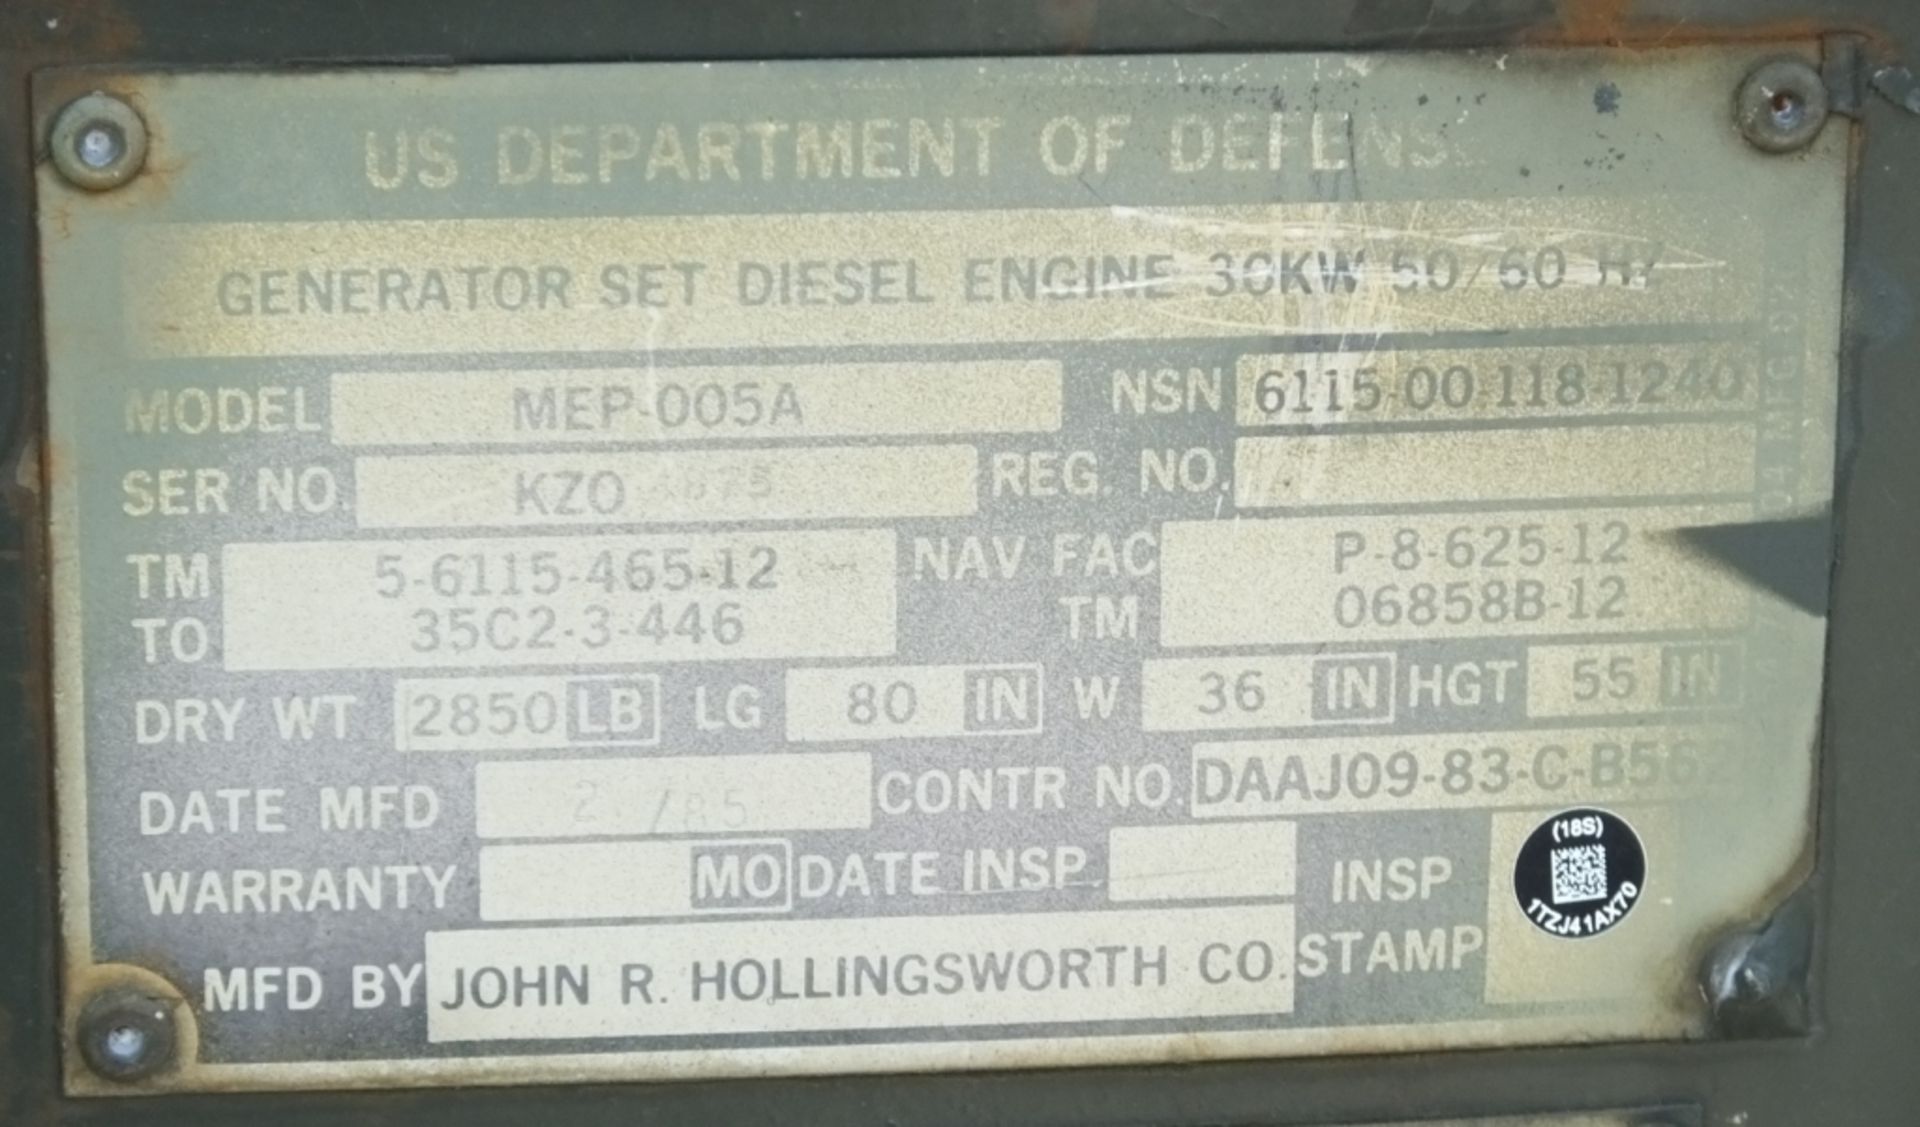 Diesel Generator Set - 30KW - 50/60hz - MEP 005A - Image 2 of 7